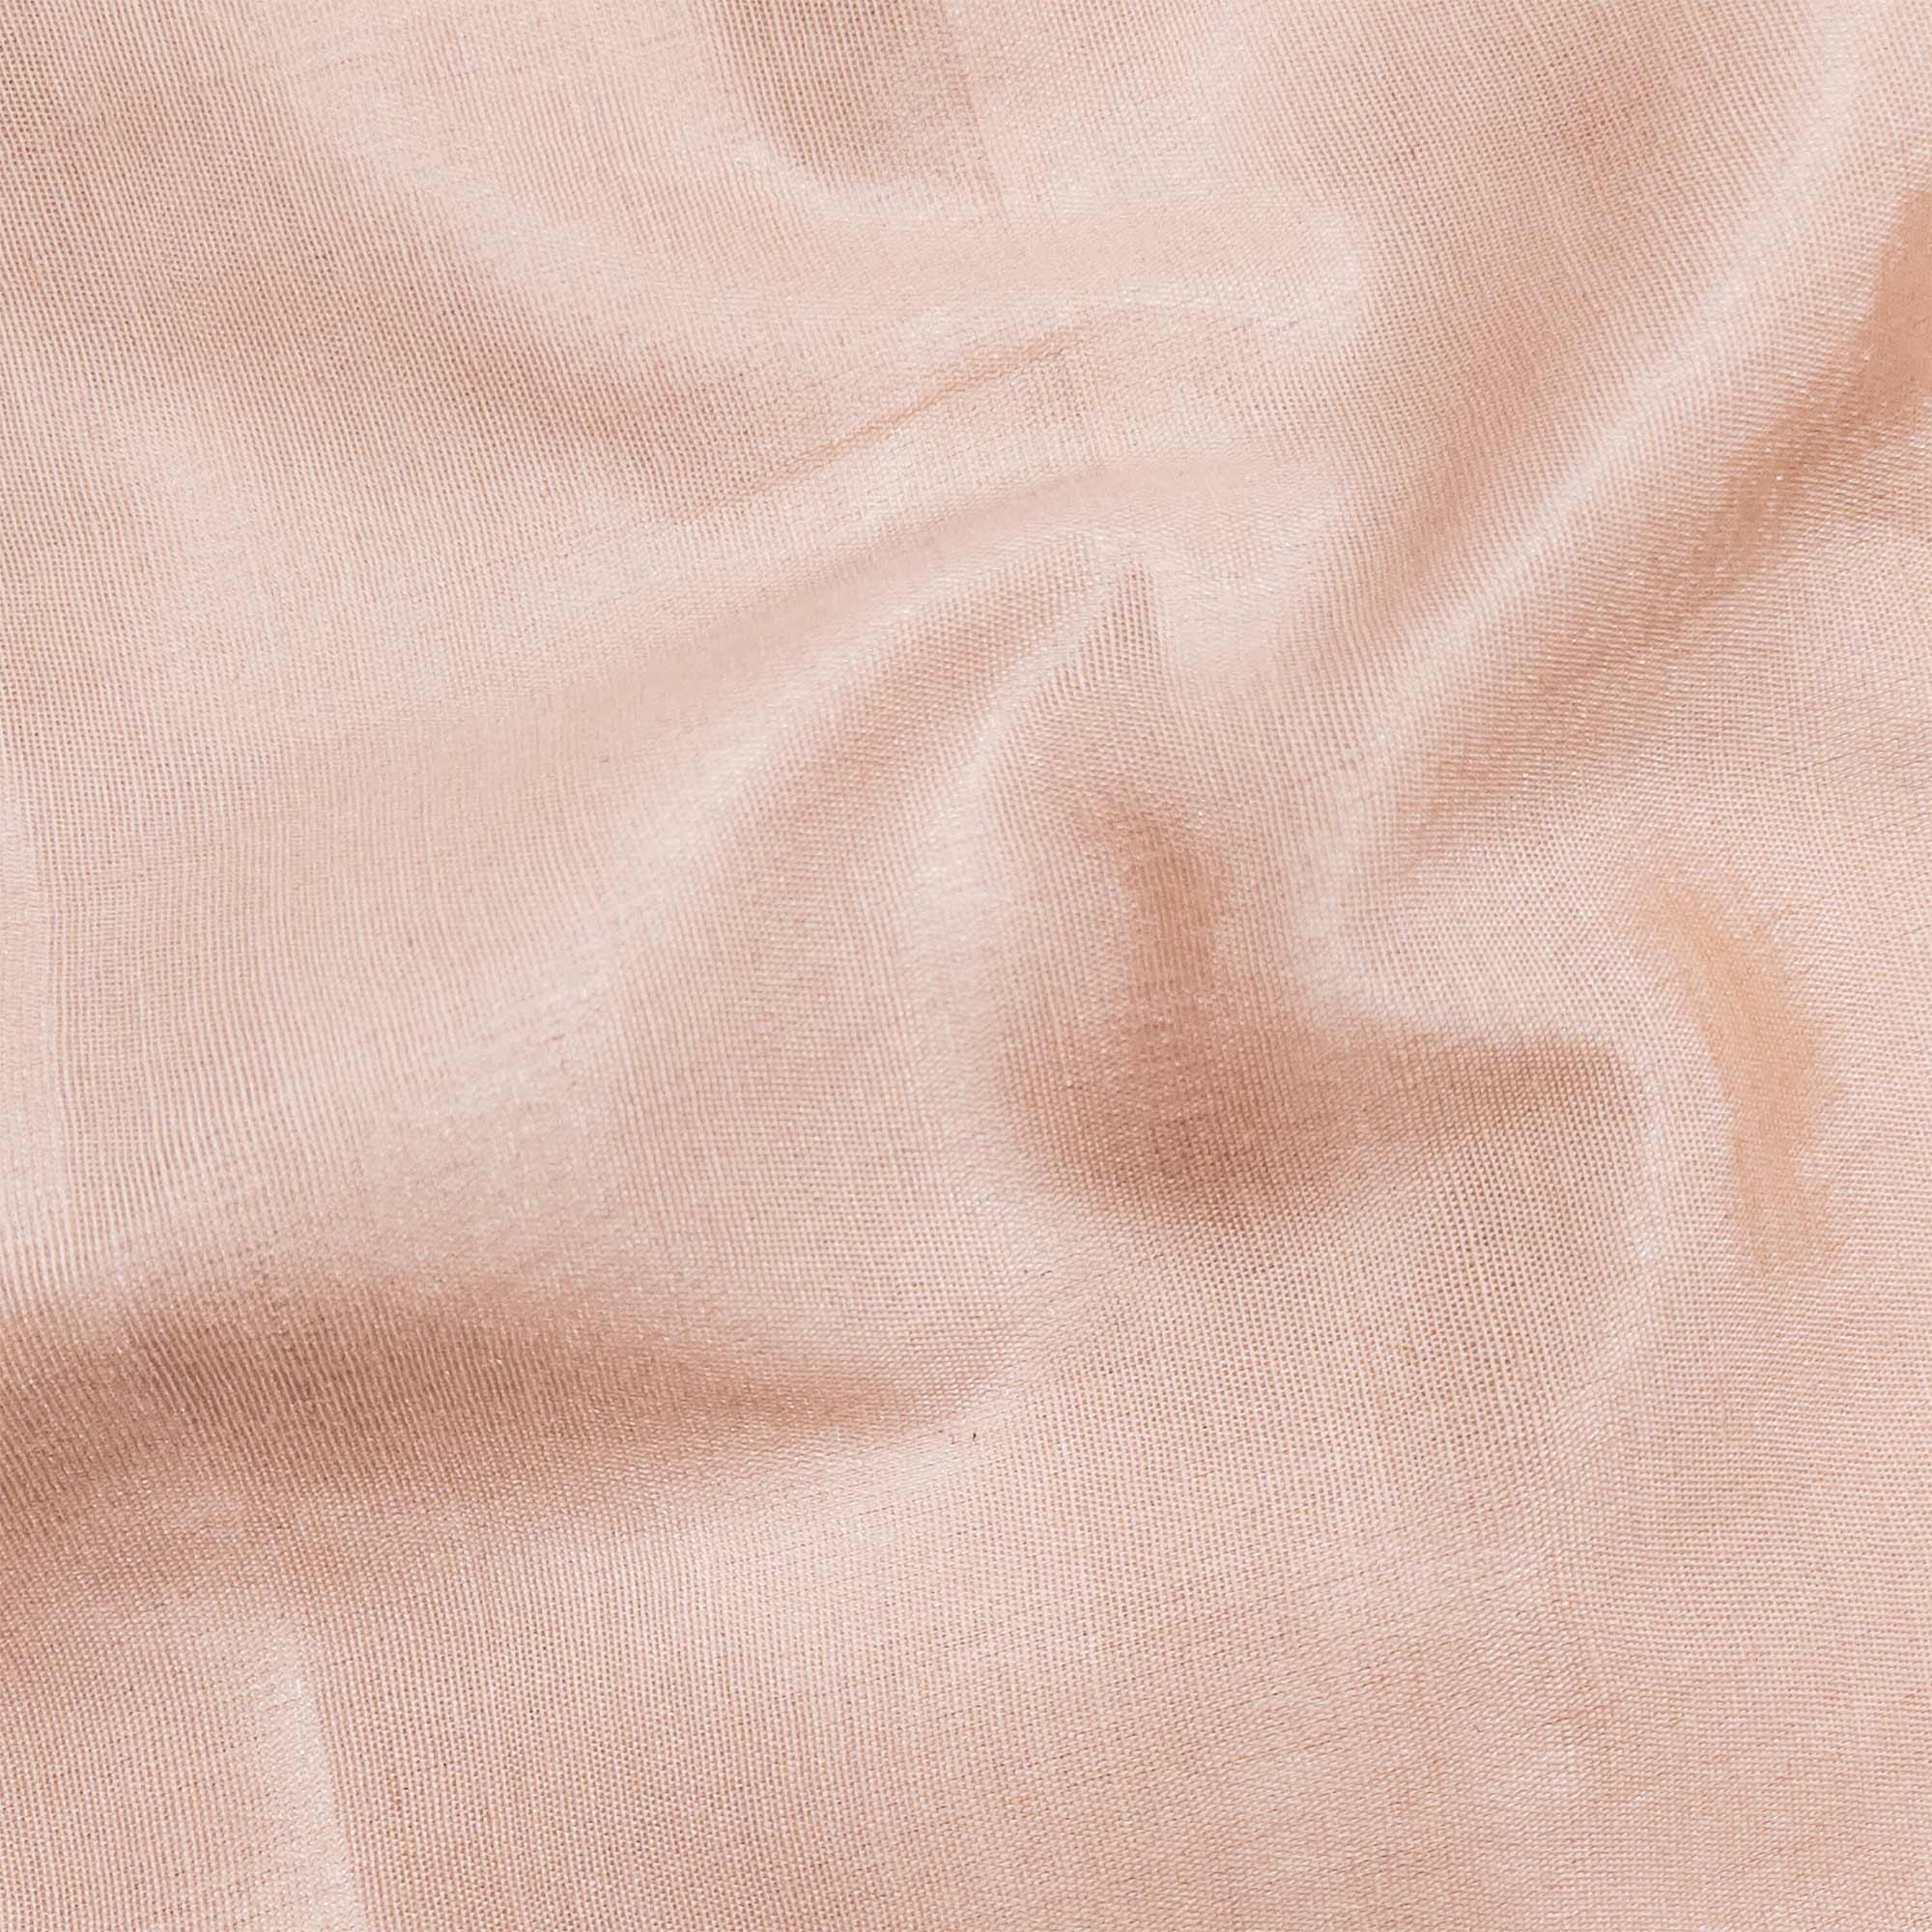 Light Peach Floral Printed Organza Dress Material